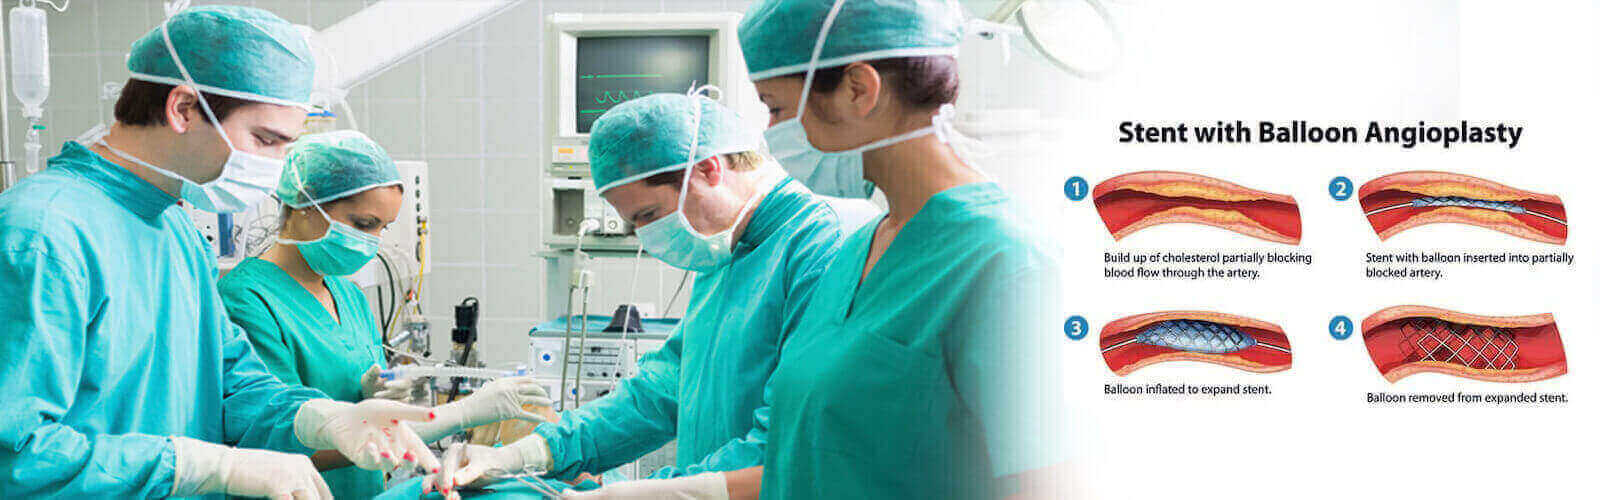 Angioplasty Surgery in Kazakhstan